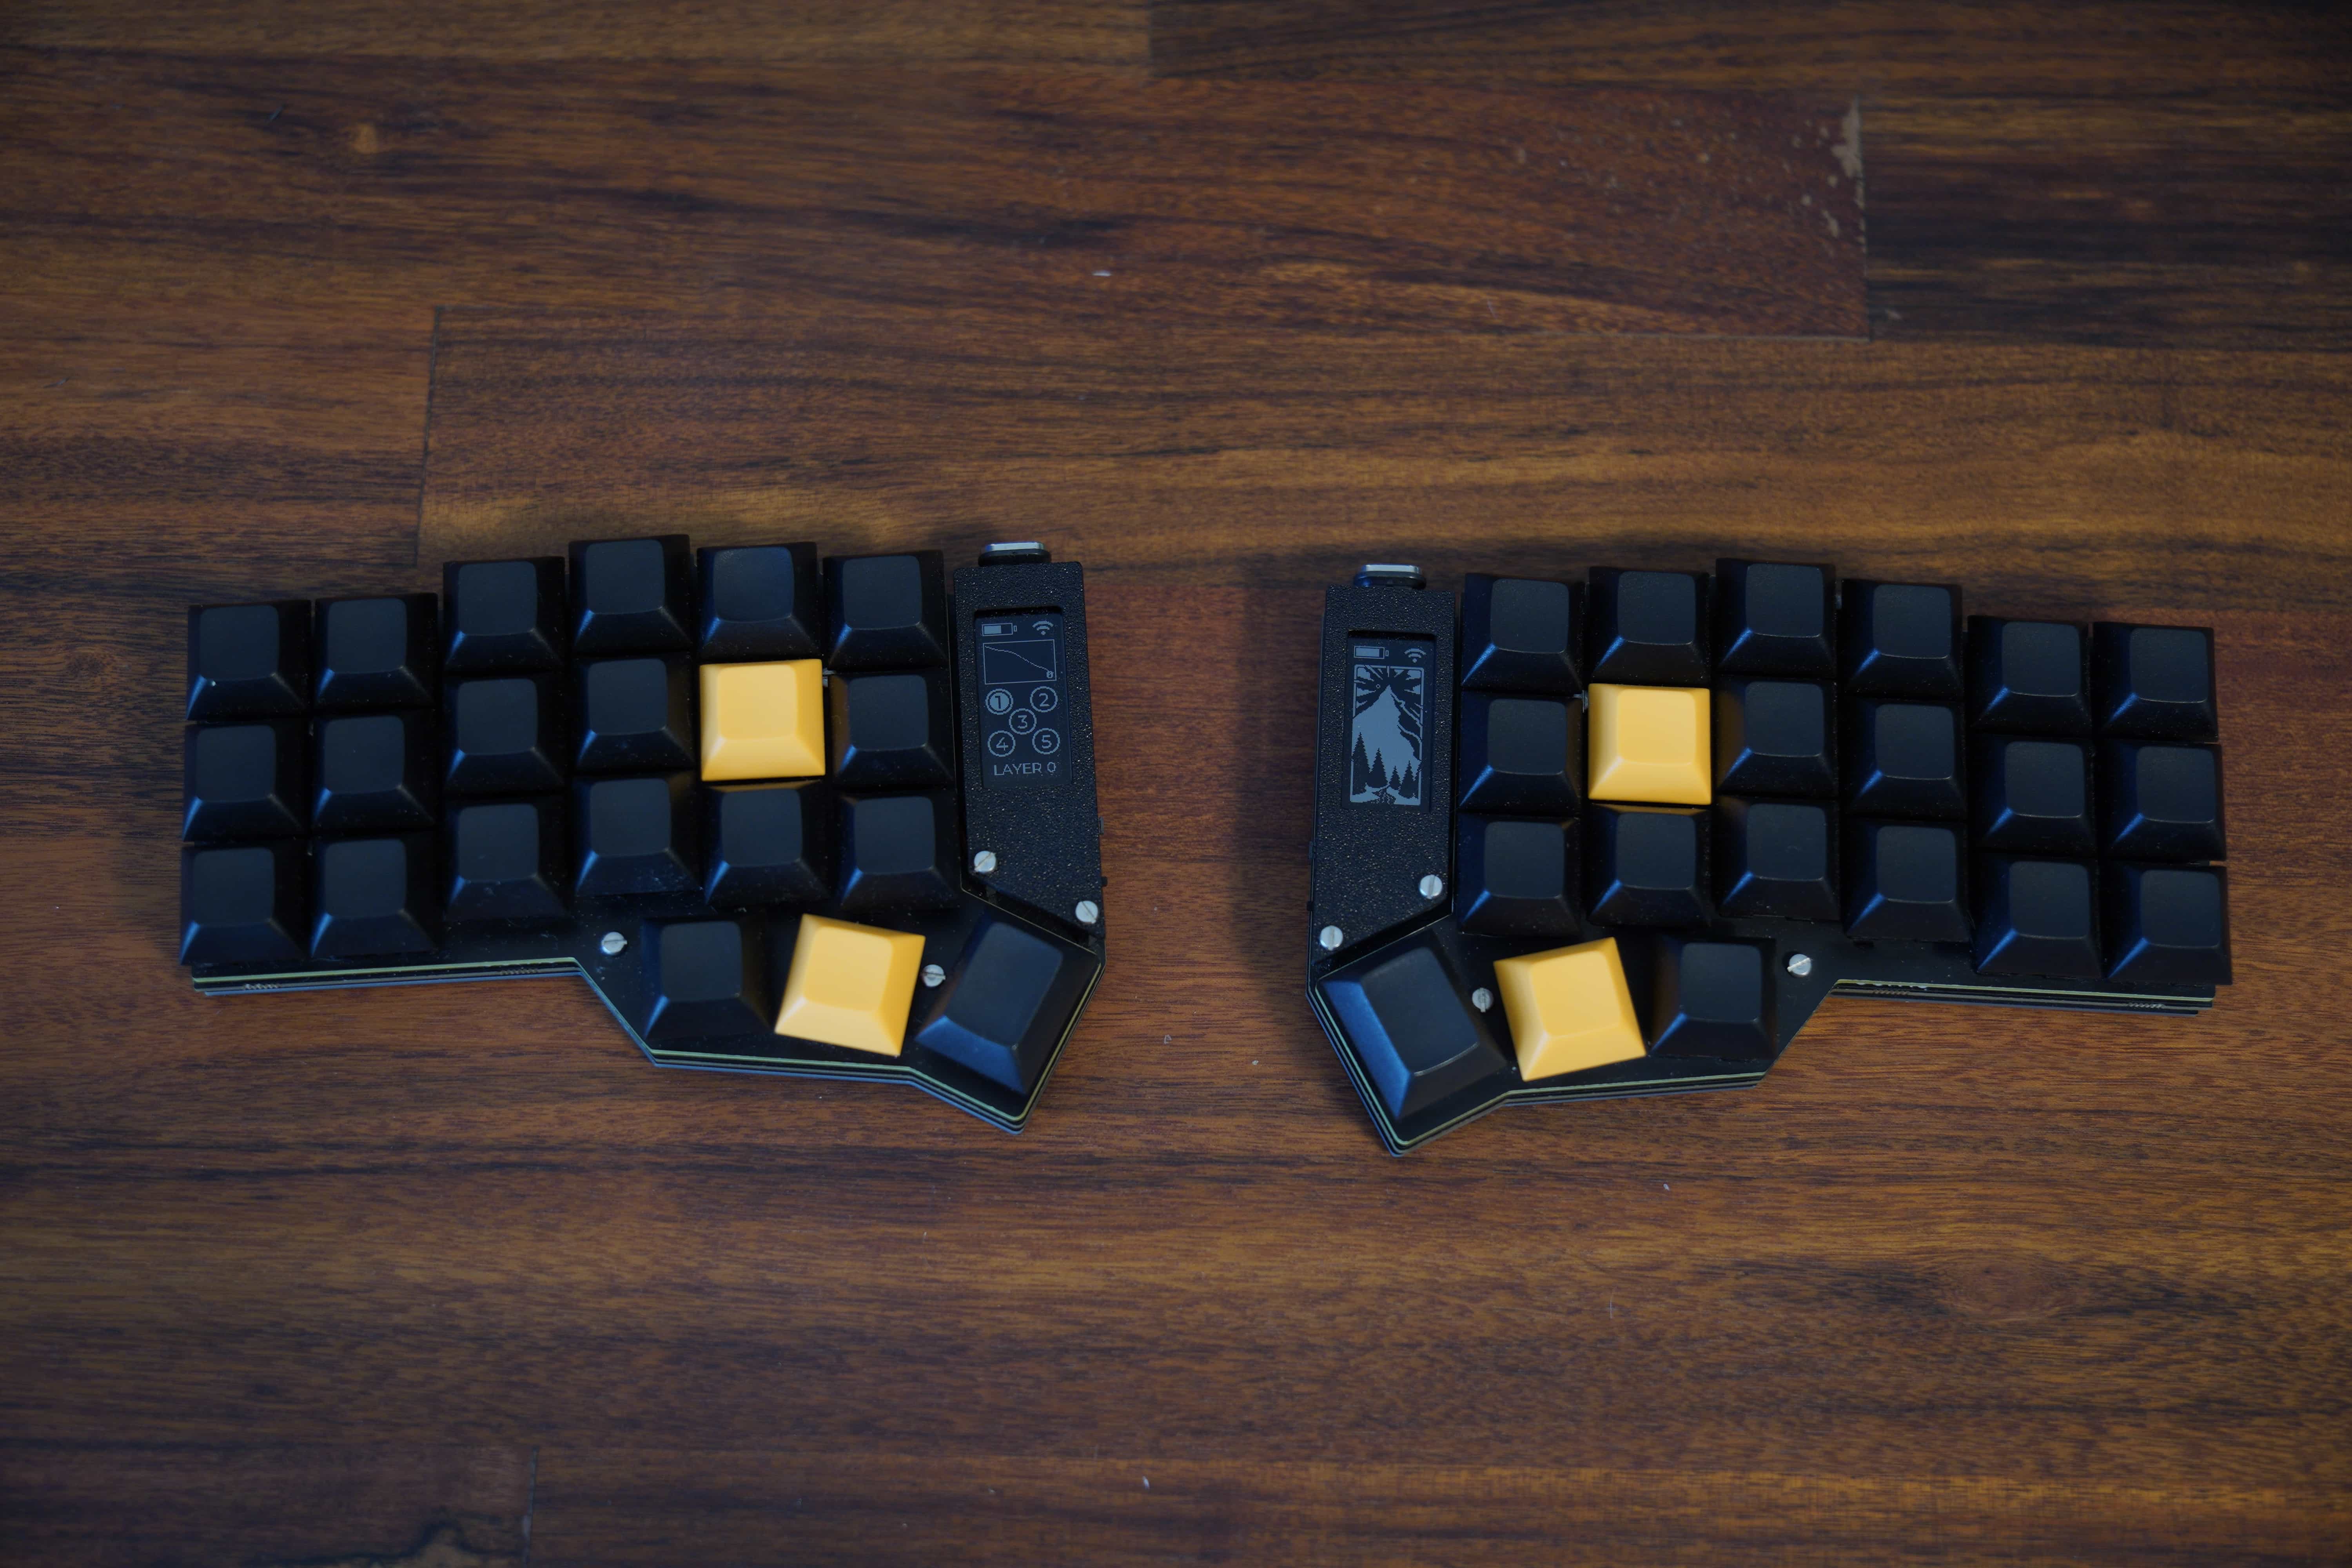 custom corne keyboard on table